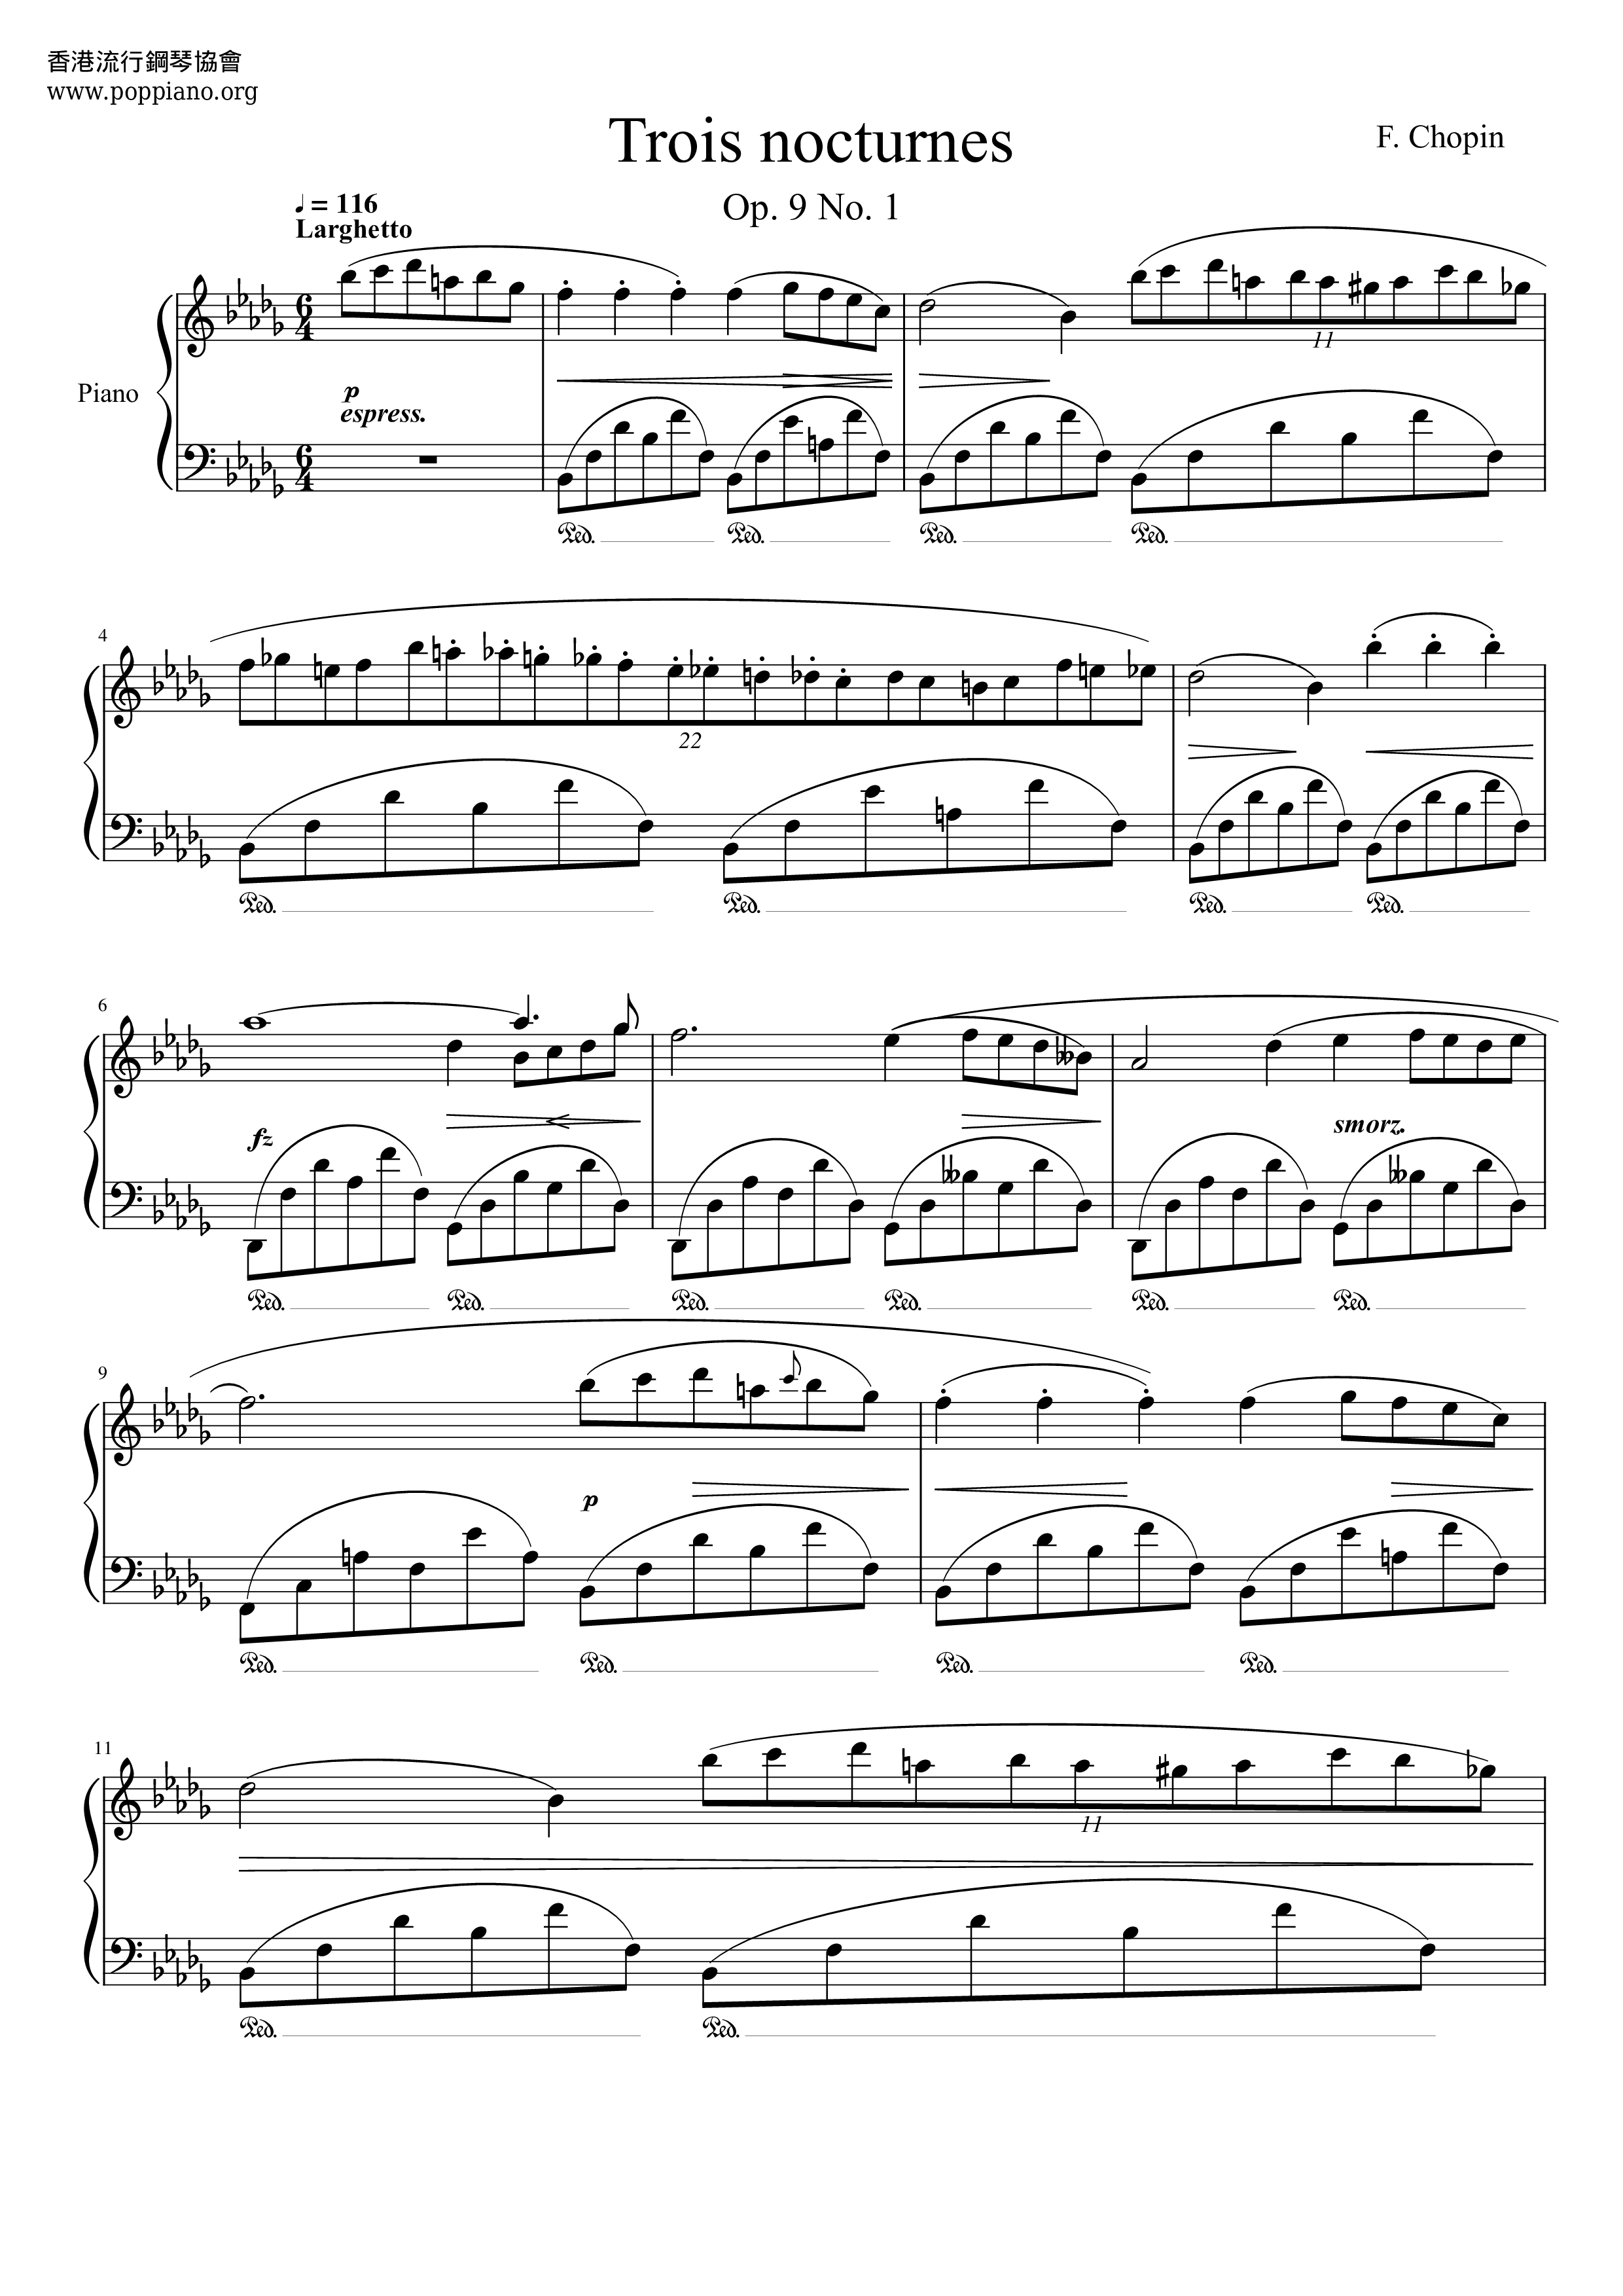 Nocturne Op. 9 No. 1 in B flat minorピアノ譜